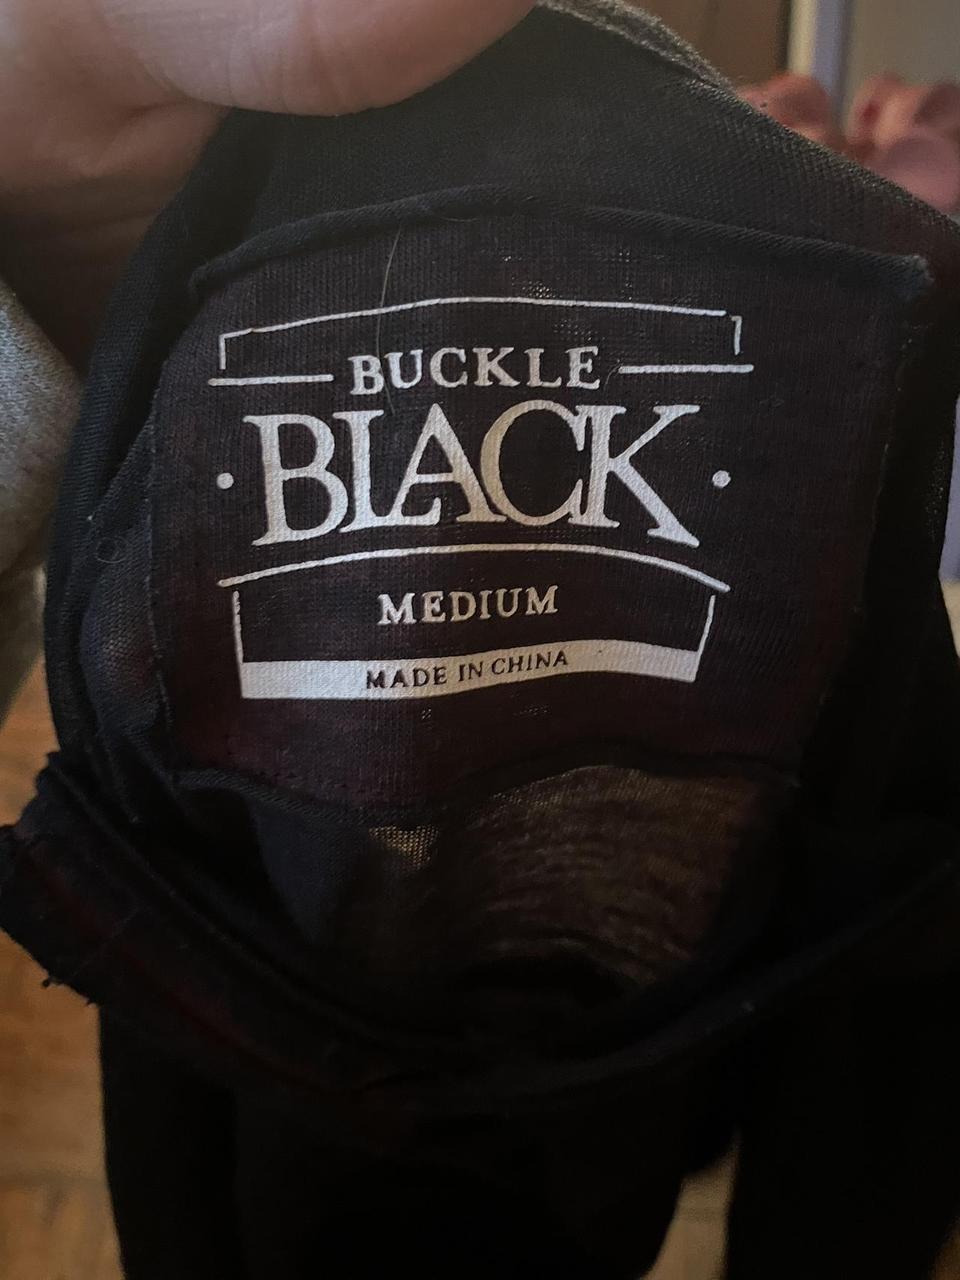 Buckle Black Men's Black Shirt (2)